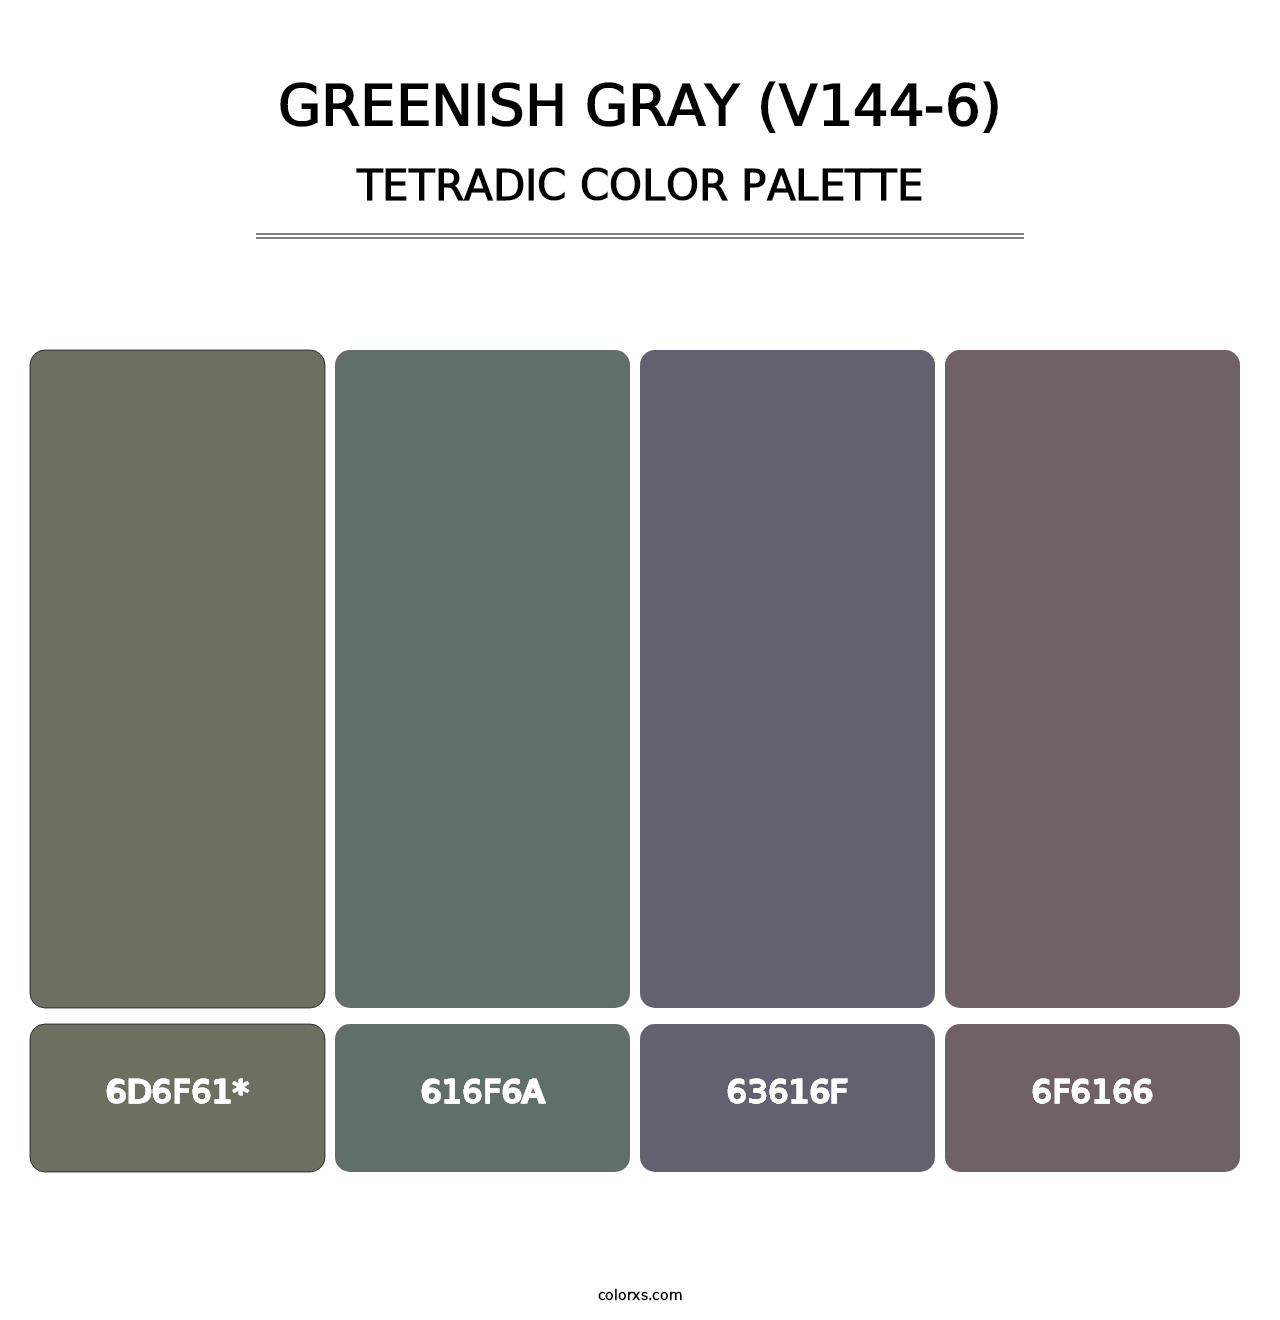 Greenish Gray (V144-6) - Tetradic Color Palette